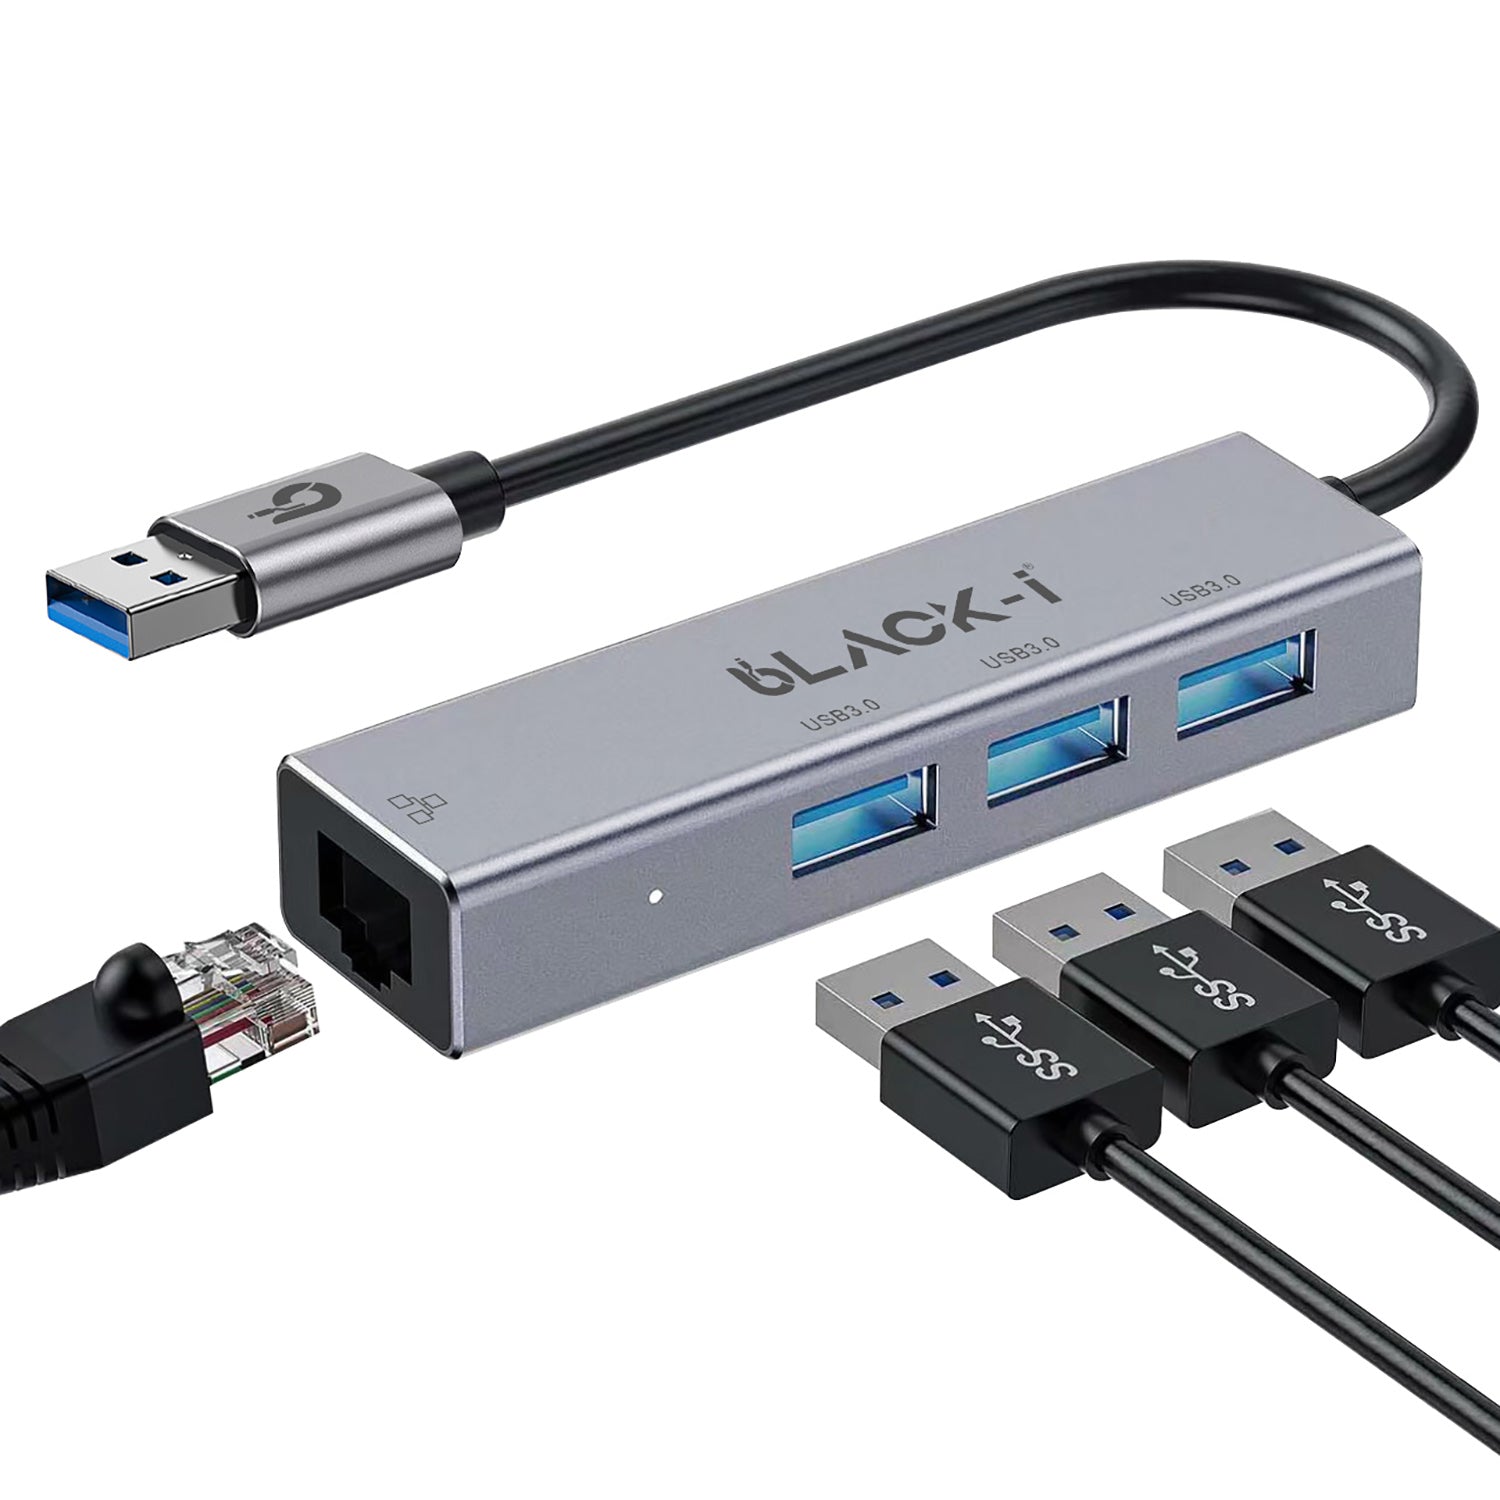 Black-i USB 3.0 to Gigabit LAN with 3*USB 3.0 Hub